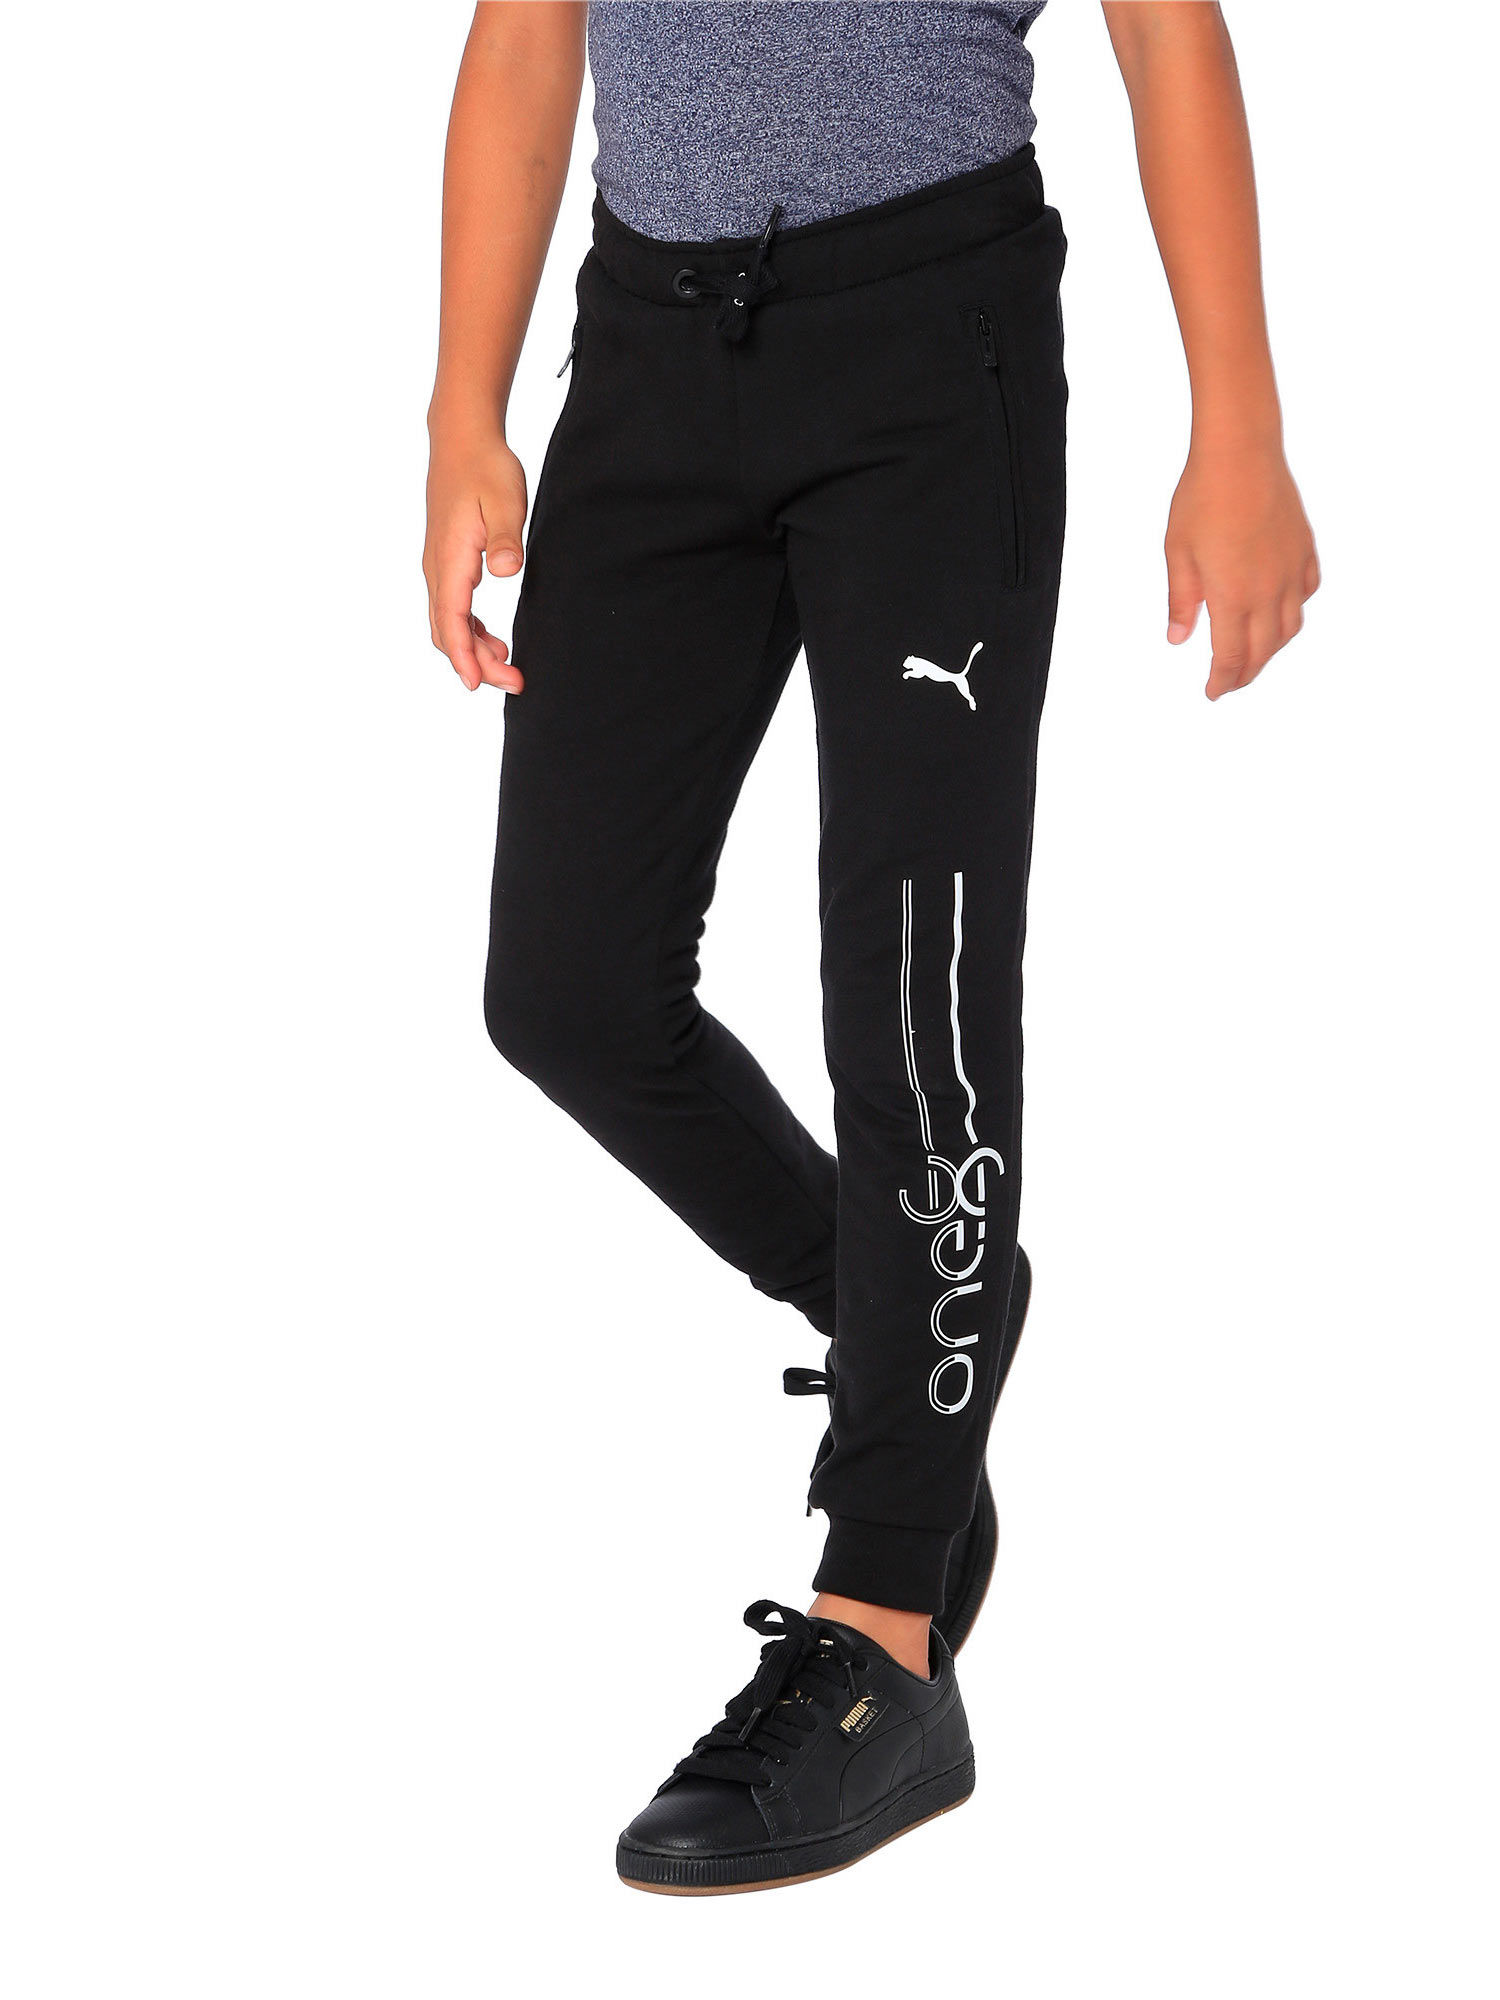 Buy Puma One8 Black Trackpants for Men's Online @ Tata CLiQ